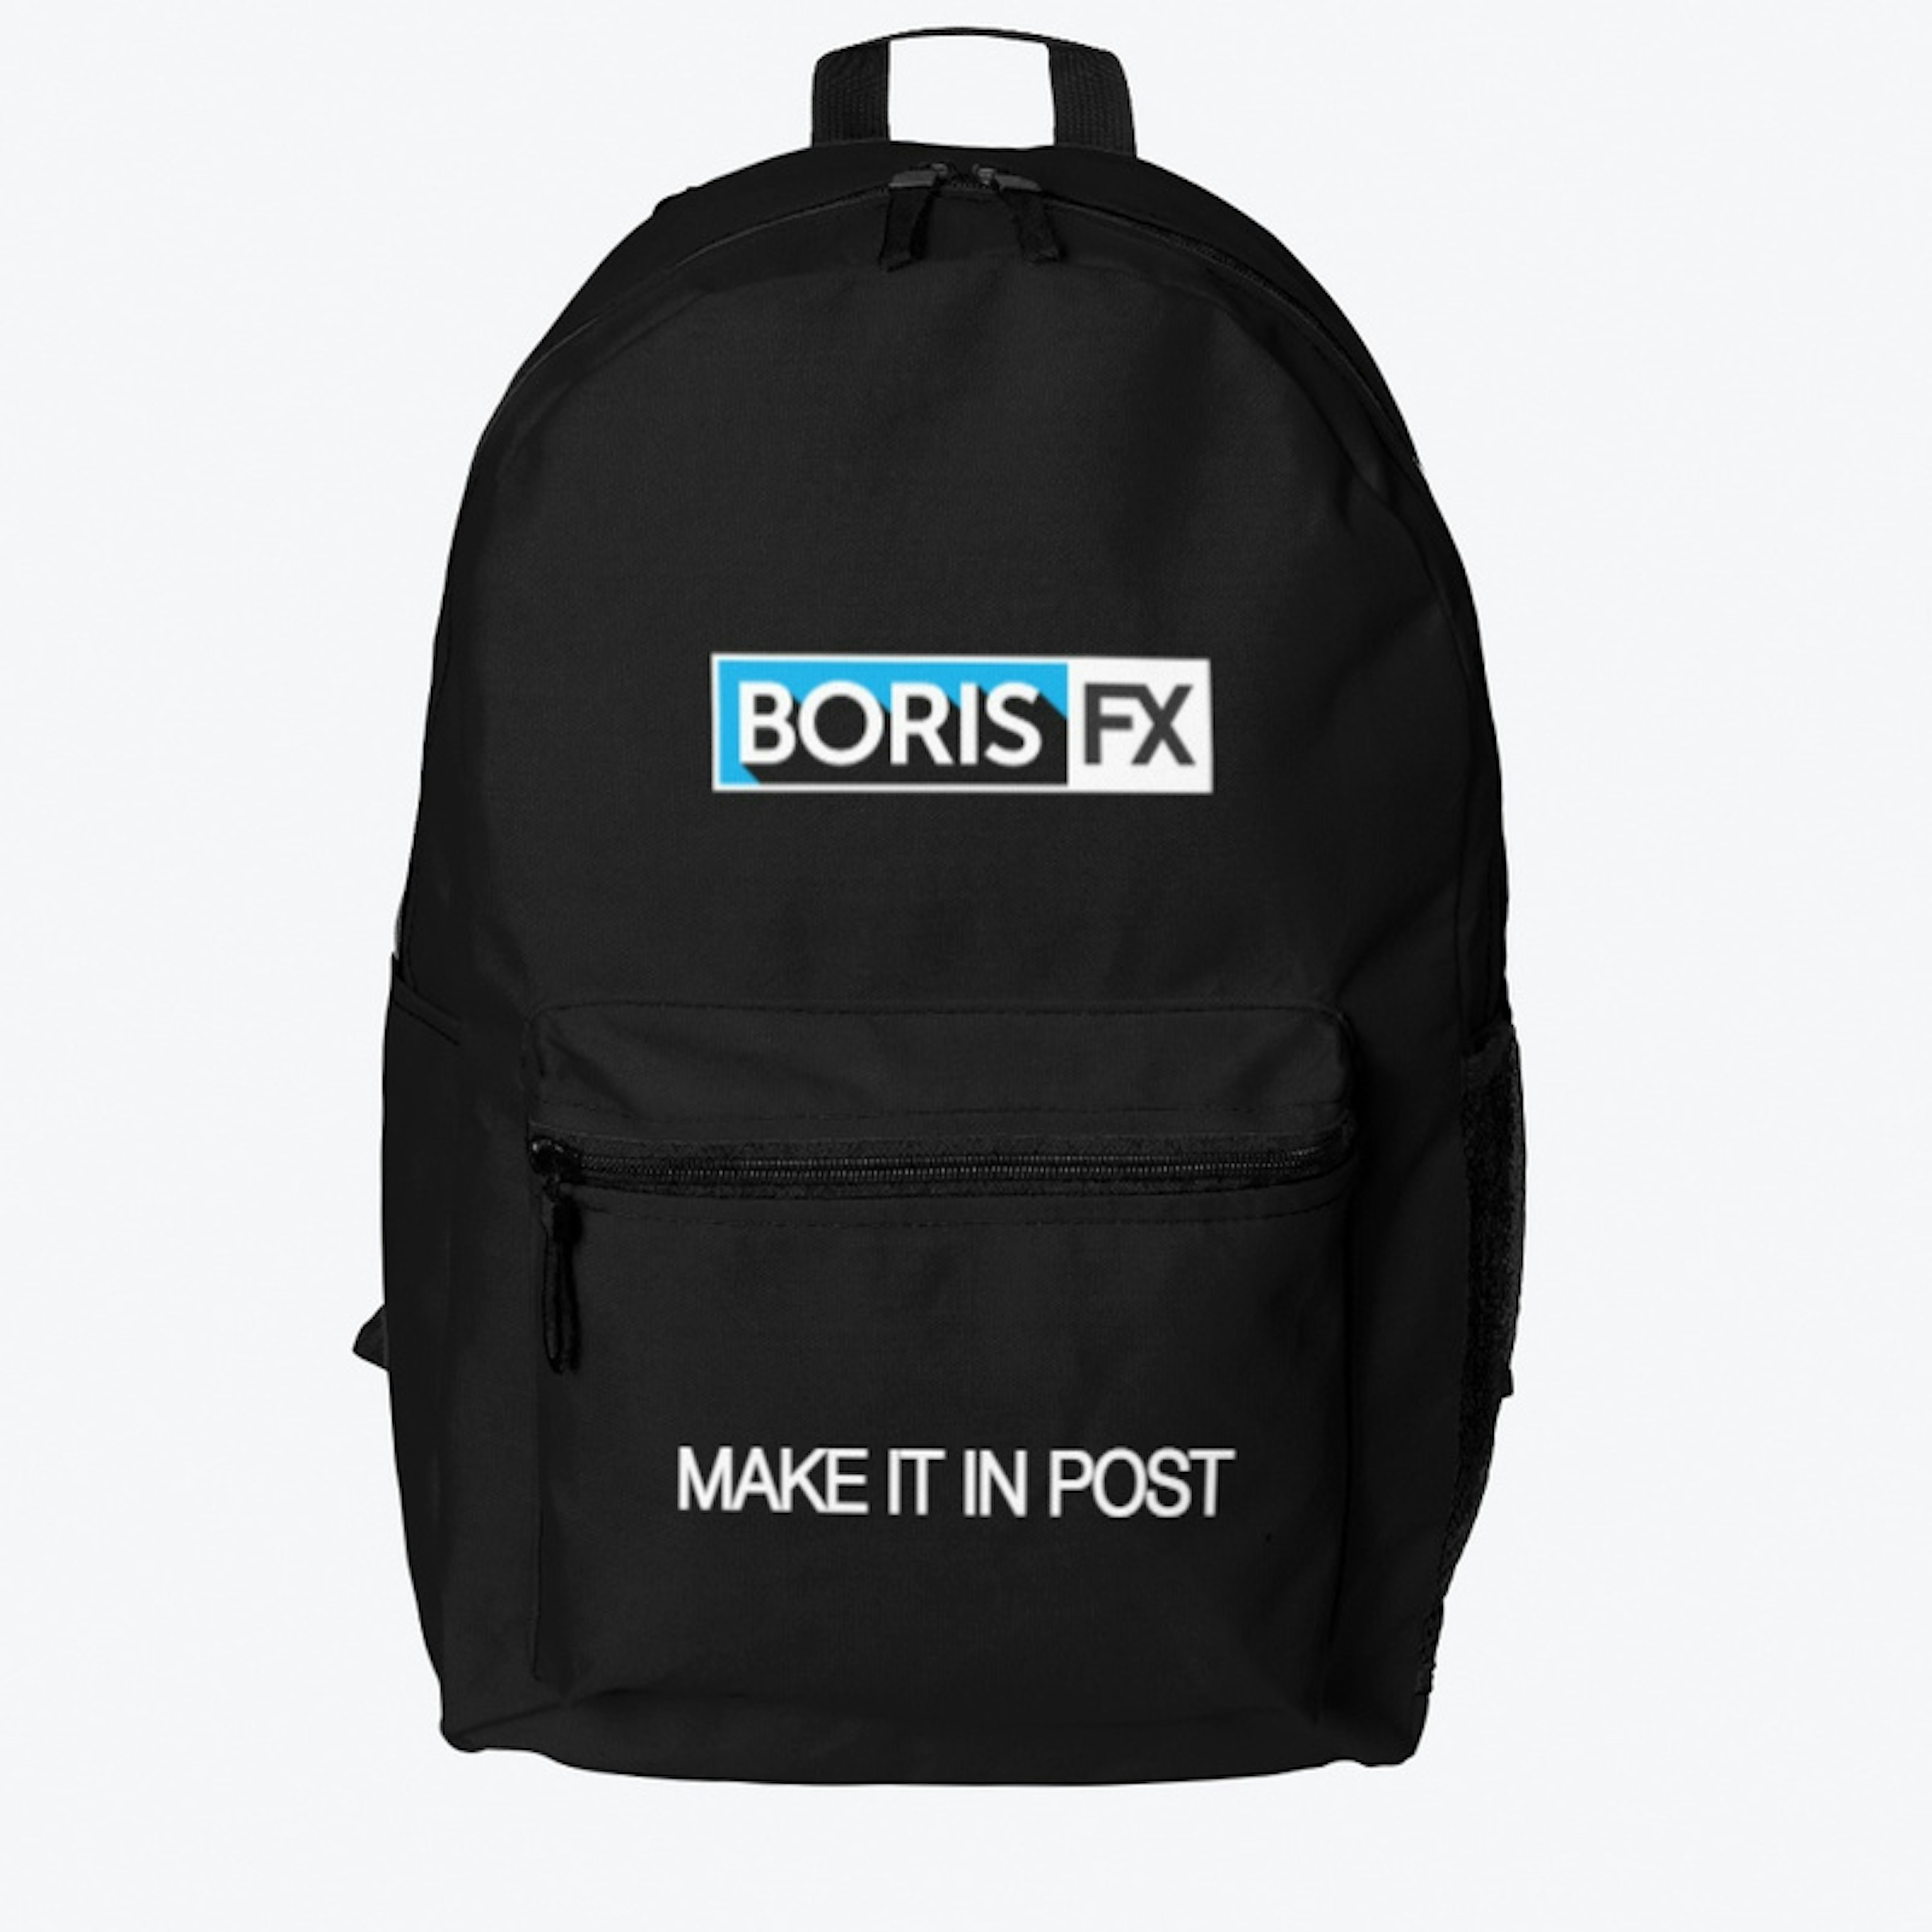 Boris FX - backpack